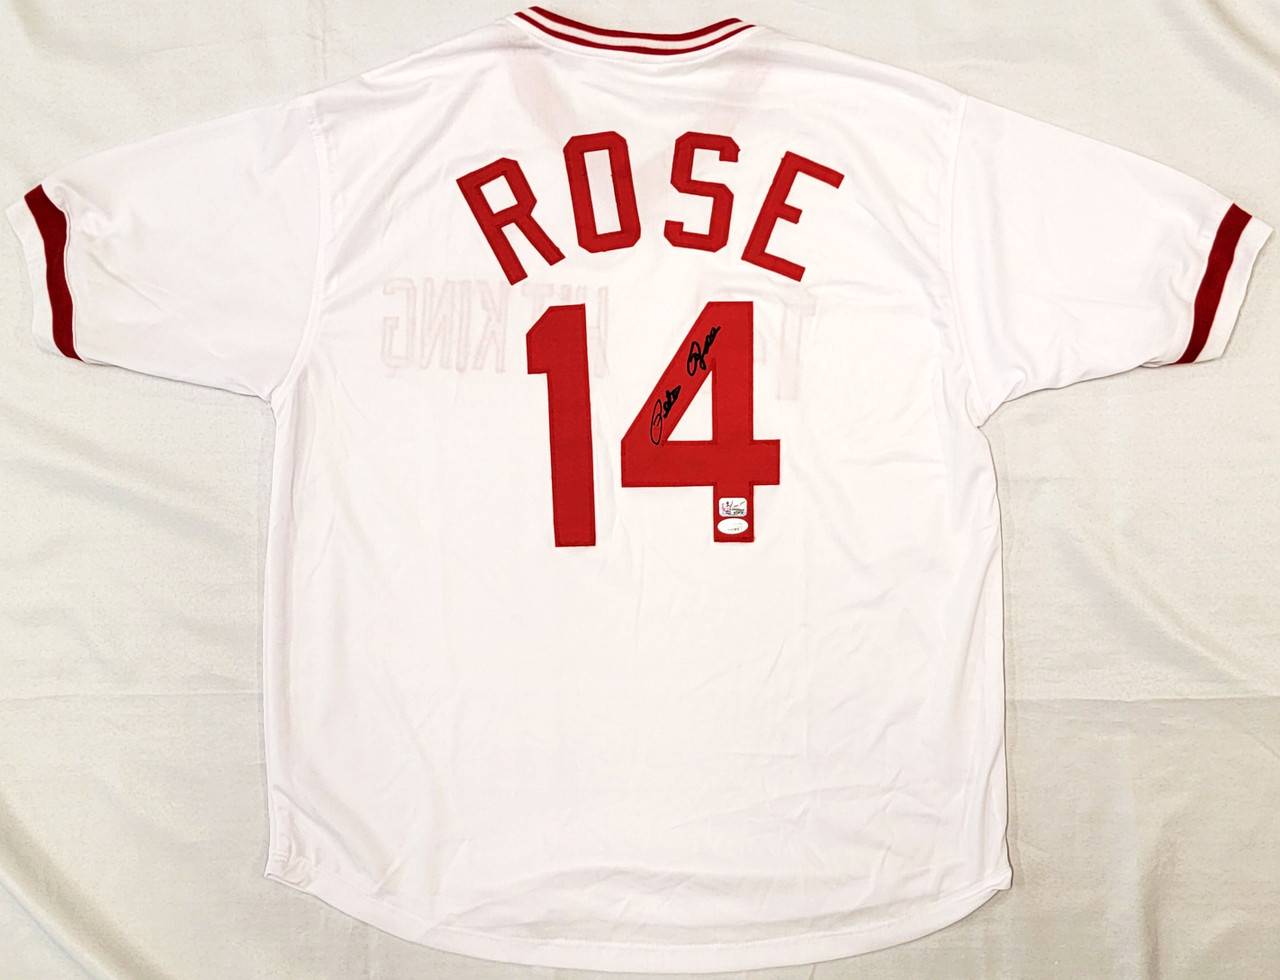 Pete Rose Signed Reds Jersey (JSA)